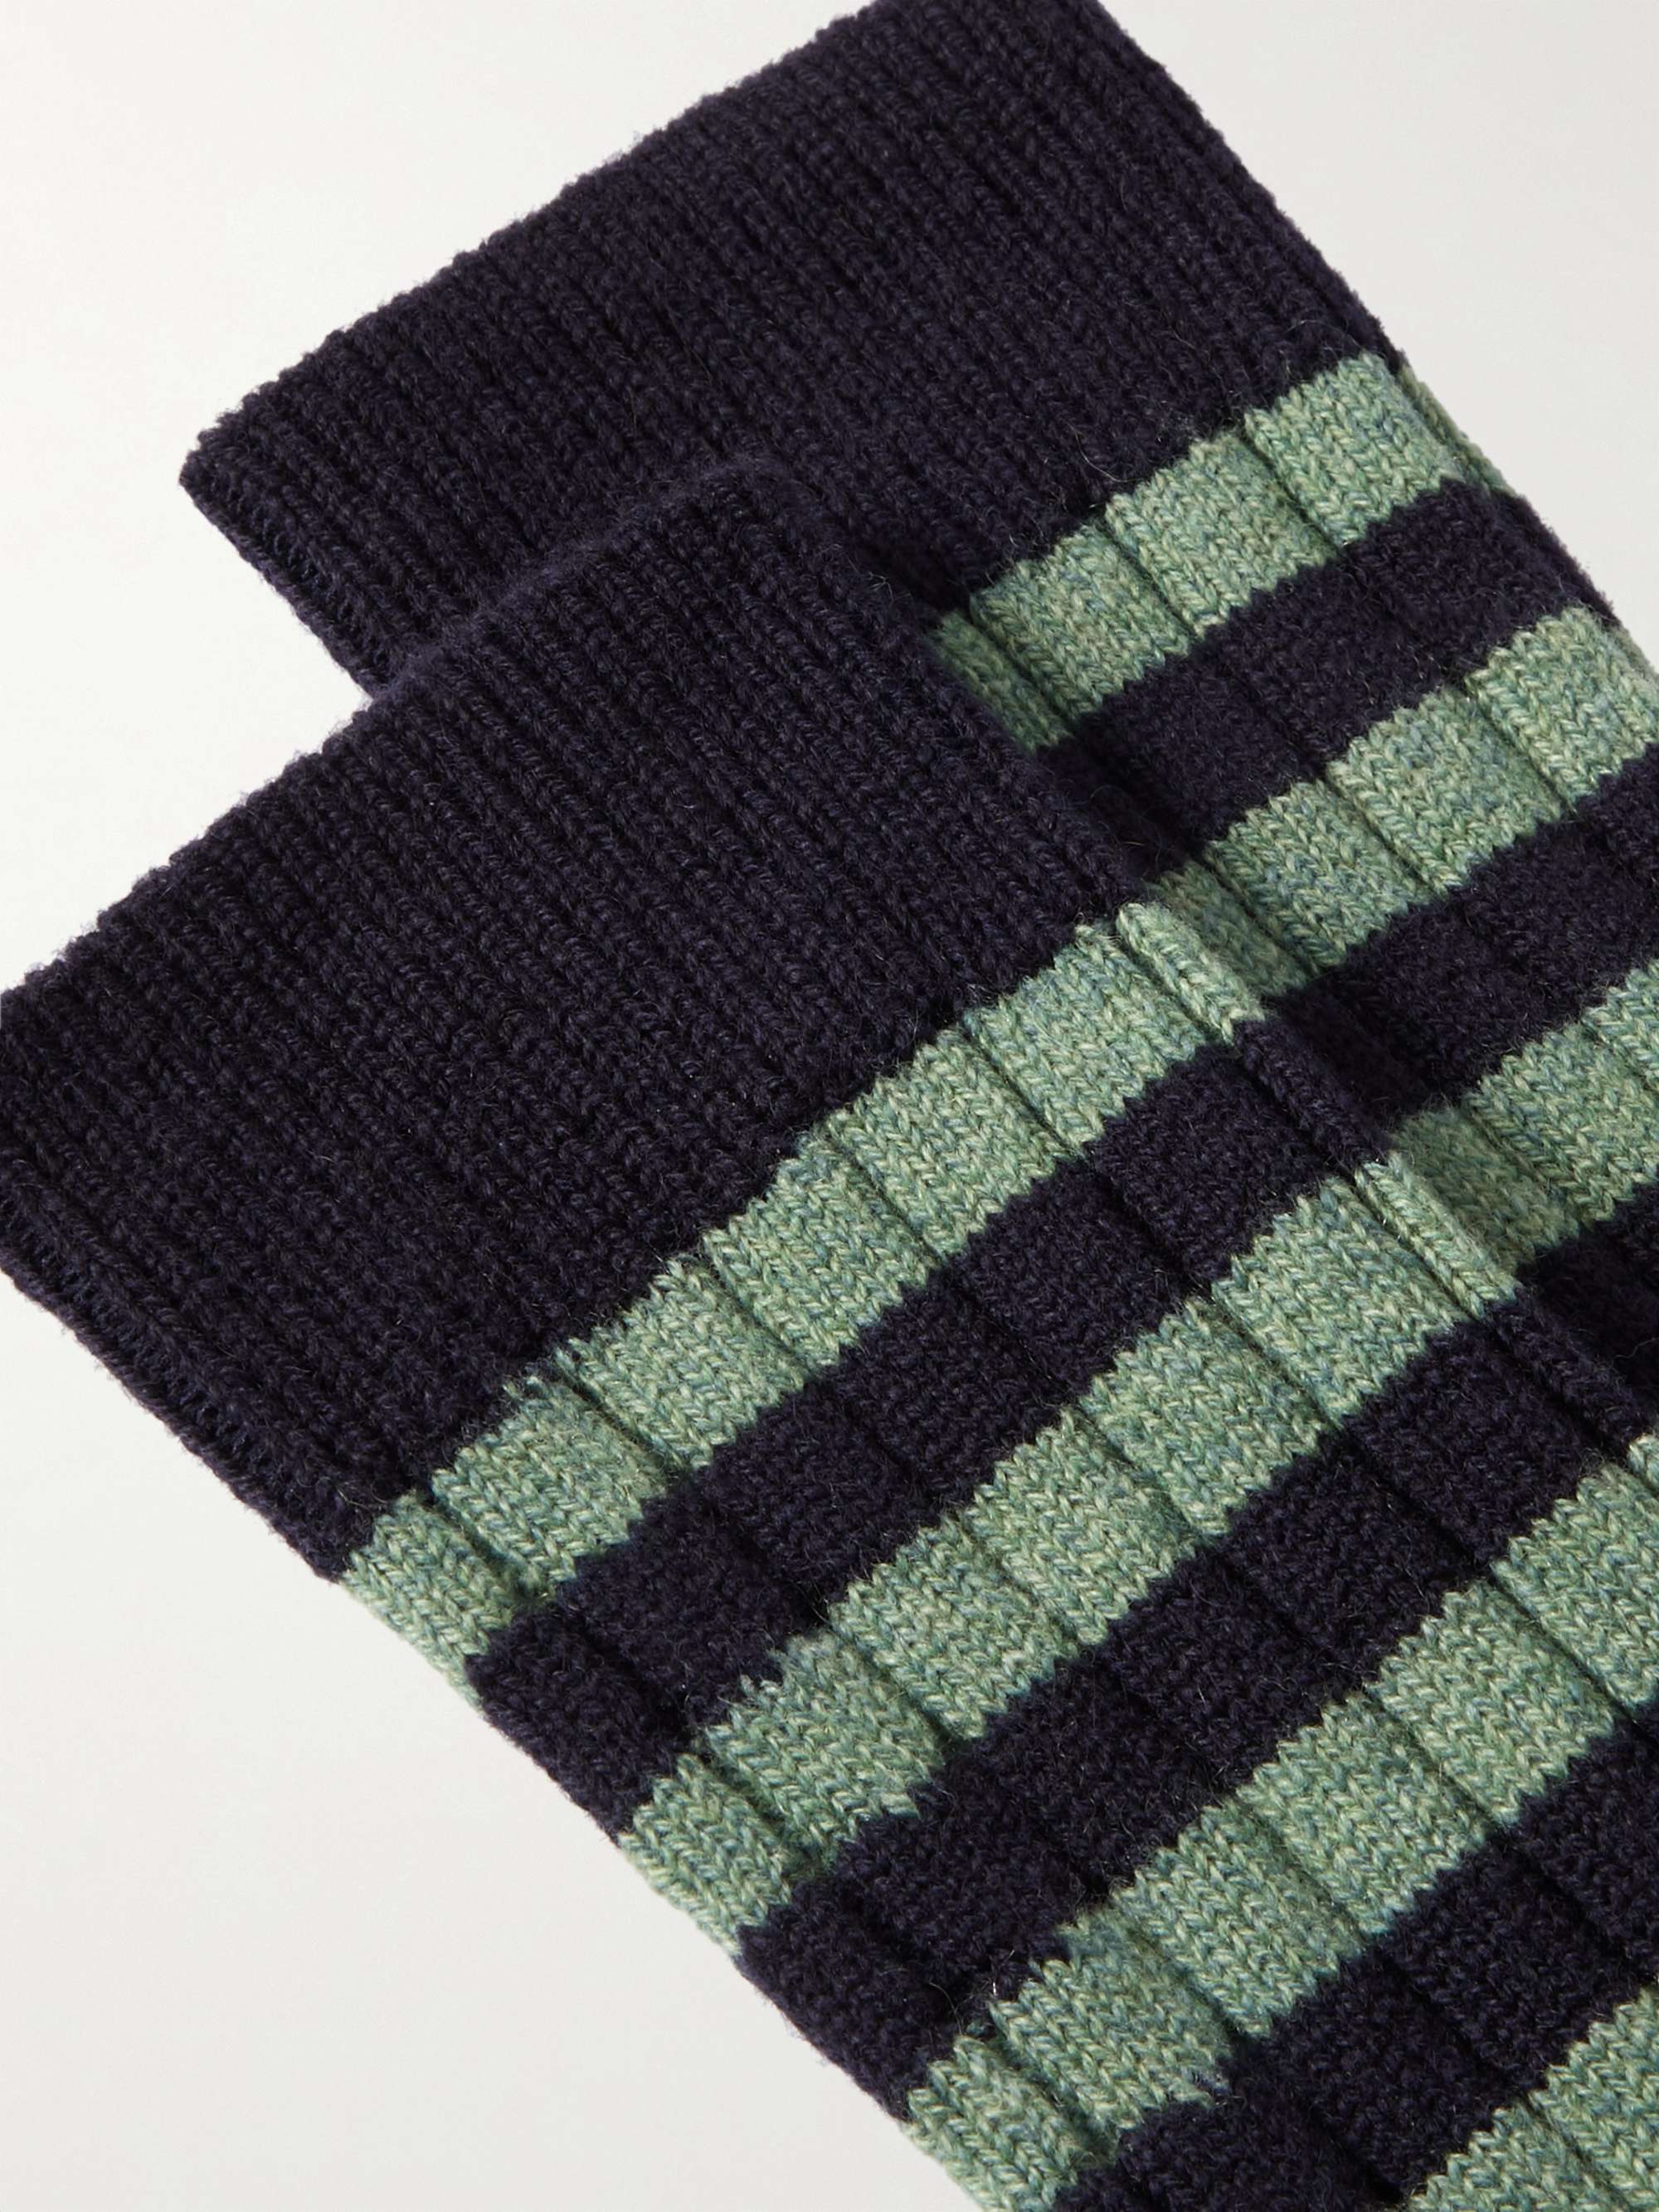 WILLIAM LOCKIE Striped Cashmere-Blend Socks